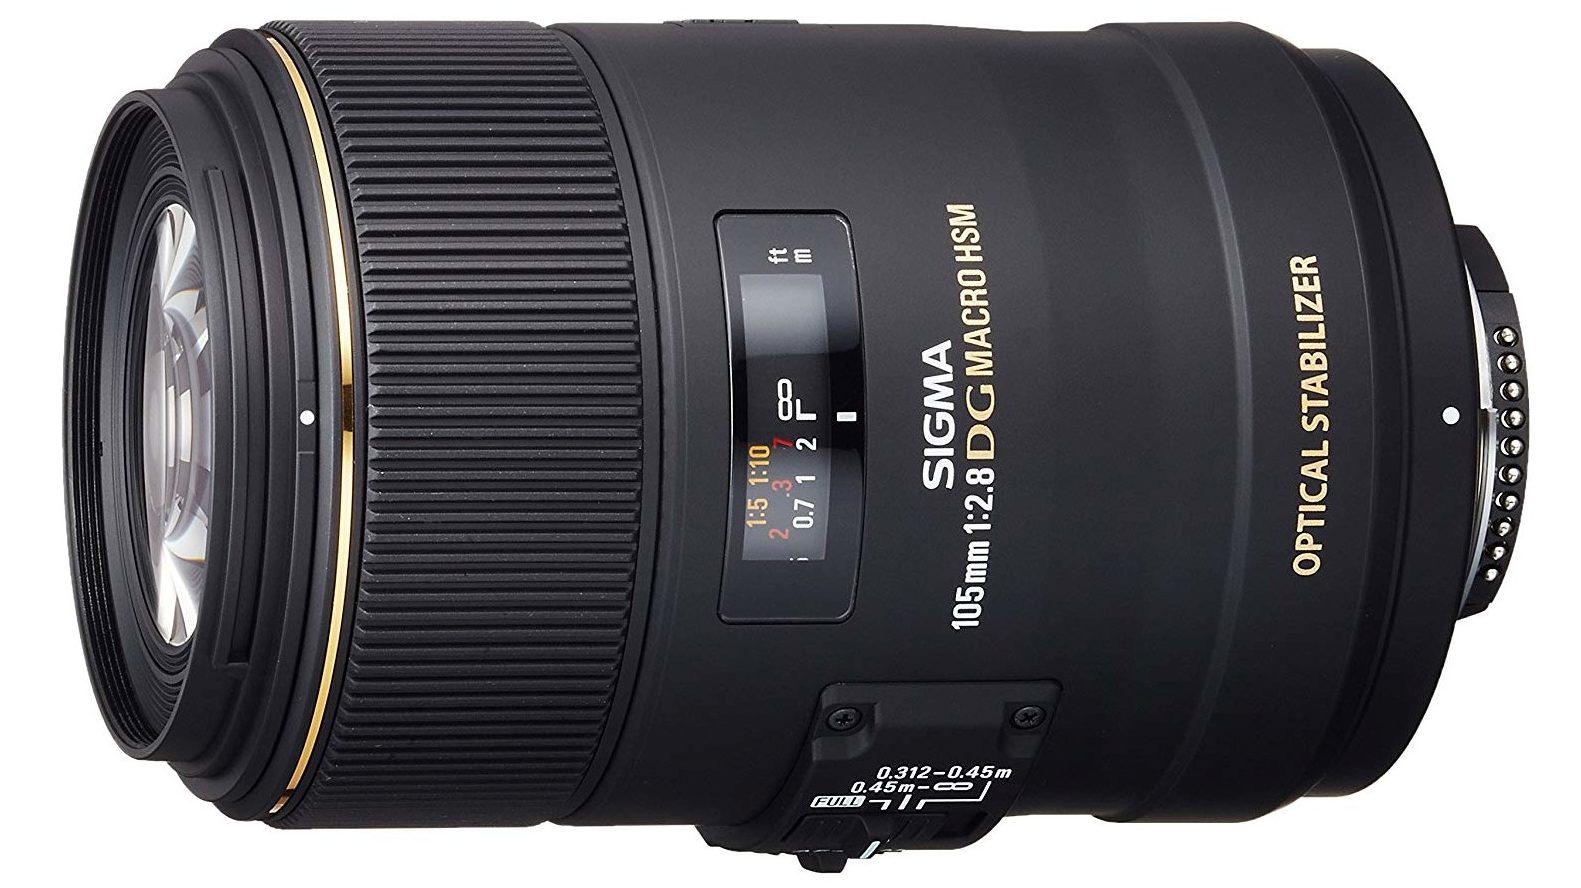 Sigma 105mm F2.8 EX DG OS HSM Macro lens